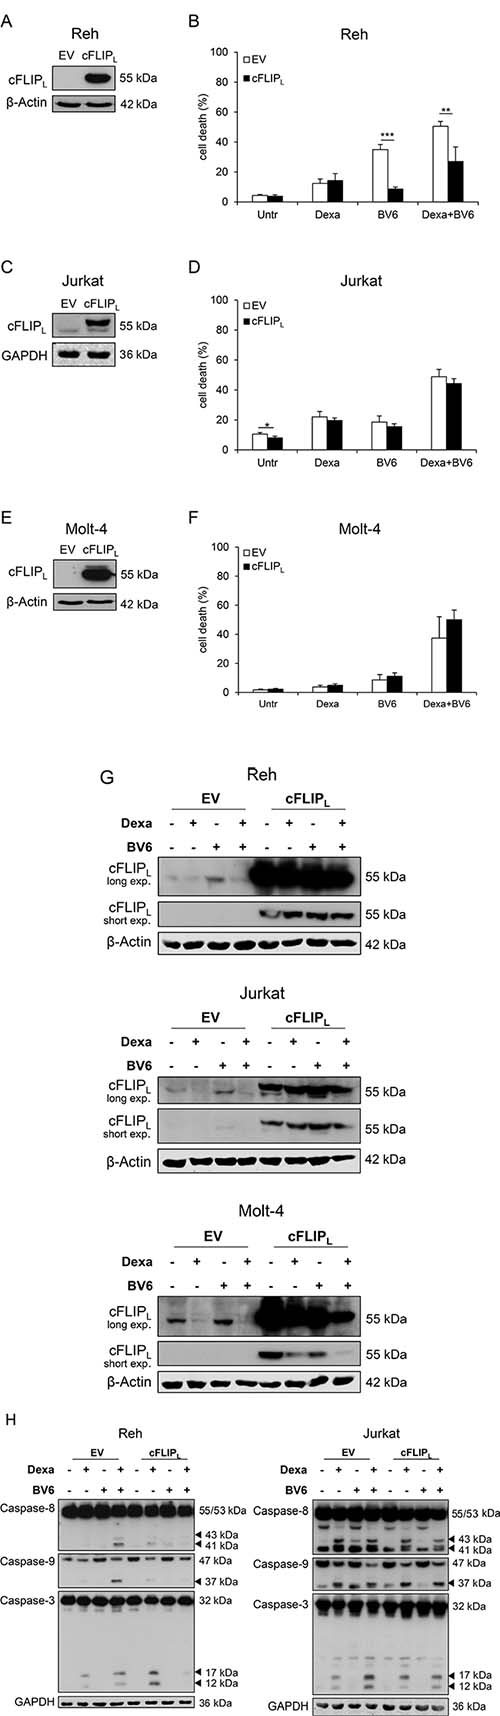 High cFLIPL levels impair Dexa/BV6-mediated cell death.